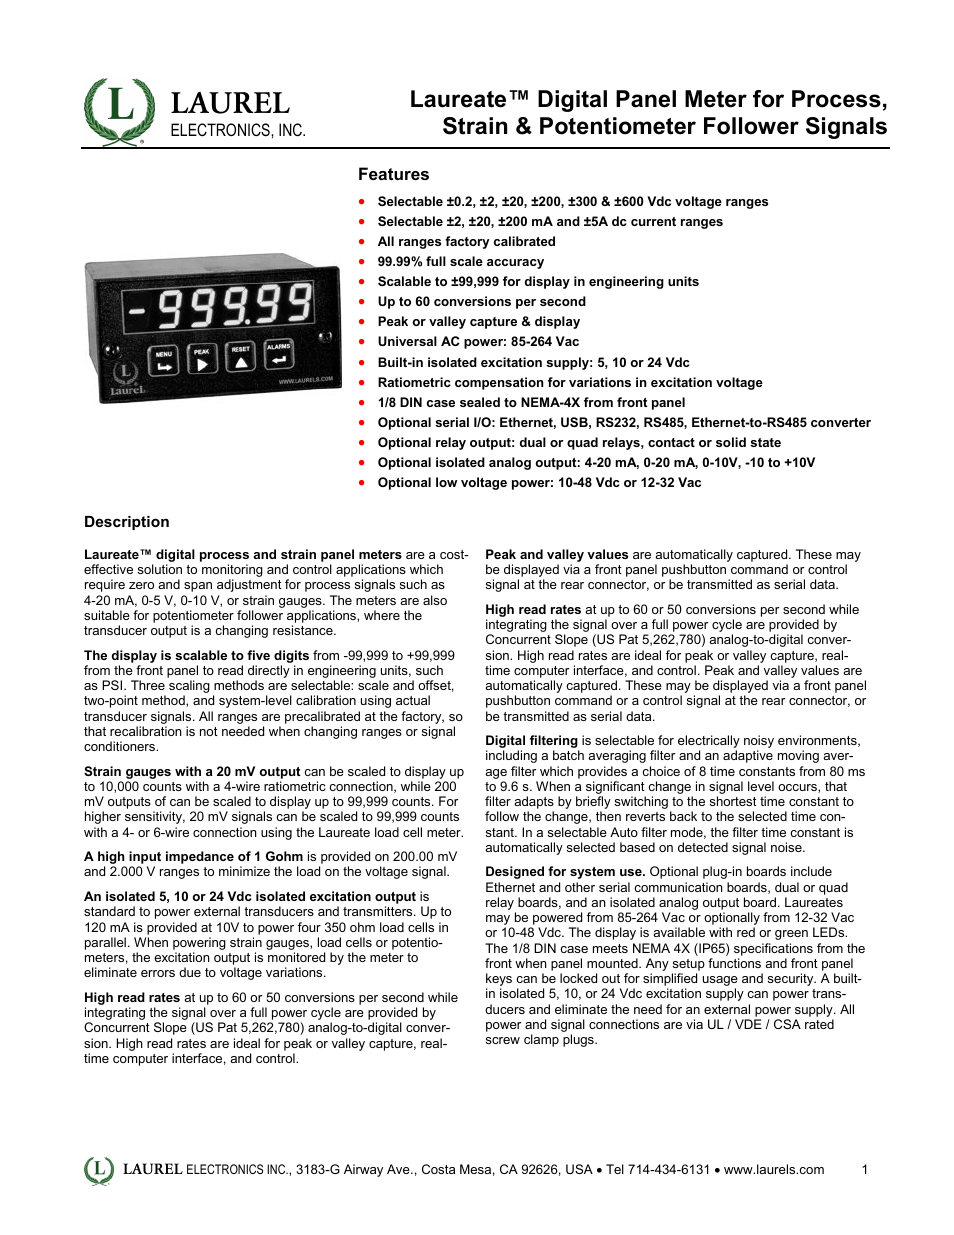 Laureate Digital Panel Meter for Process, Strain & Potentiometer Follower Signals